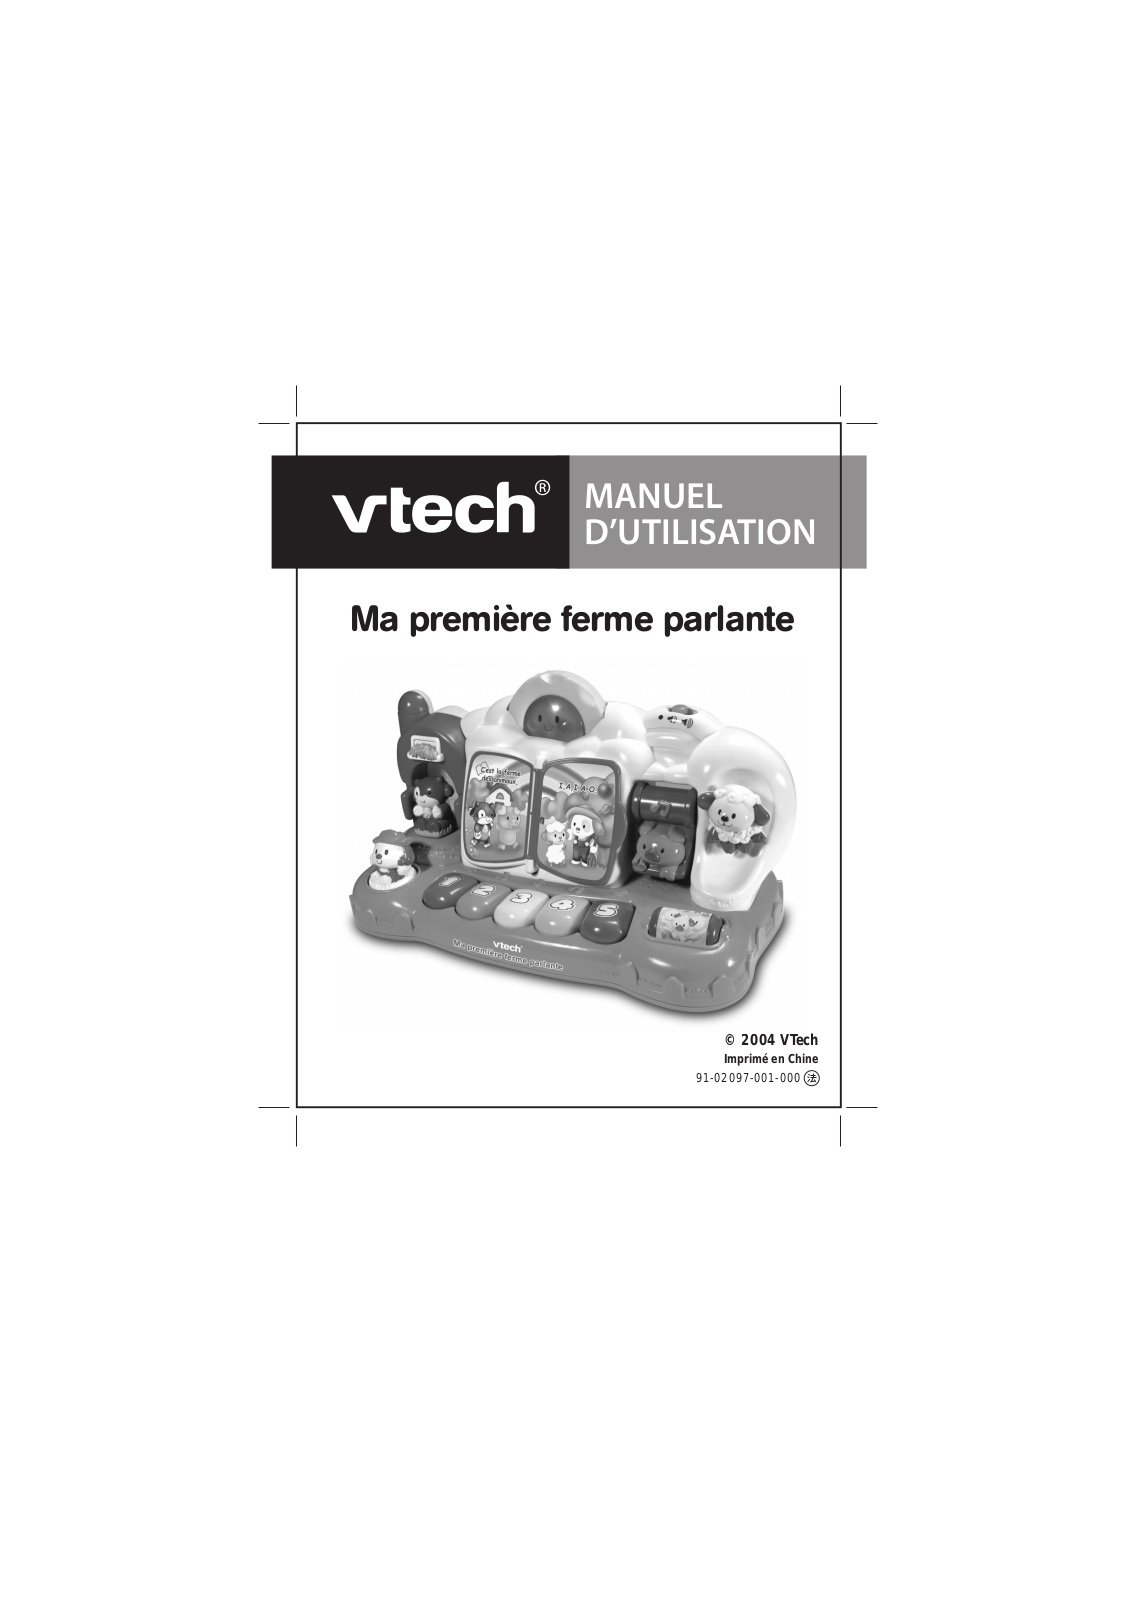 Vtech MA PREMIERE FERME PARLANTE User Manual